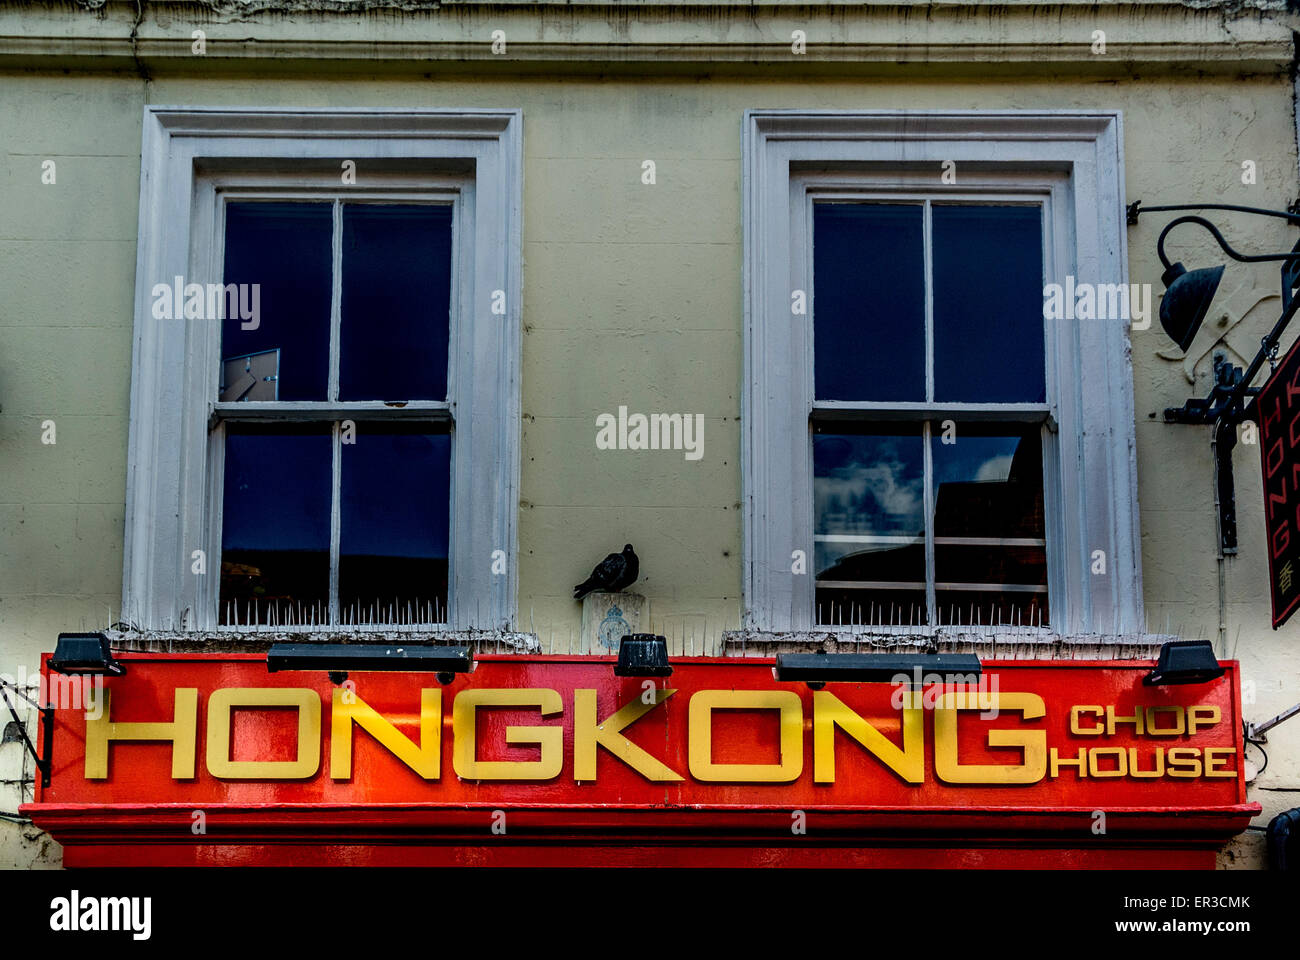 Hong Kong Chop House takeaway sign Stock Photo